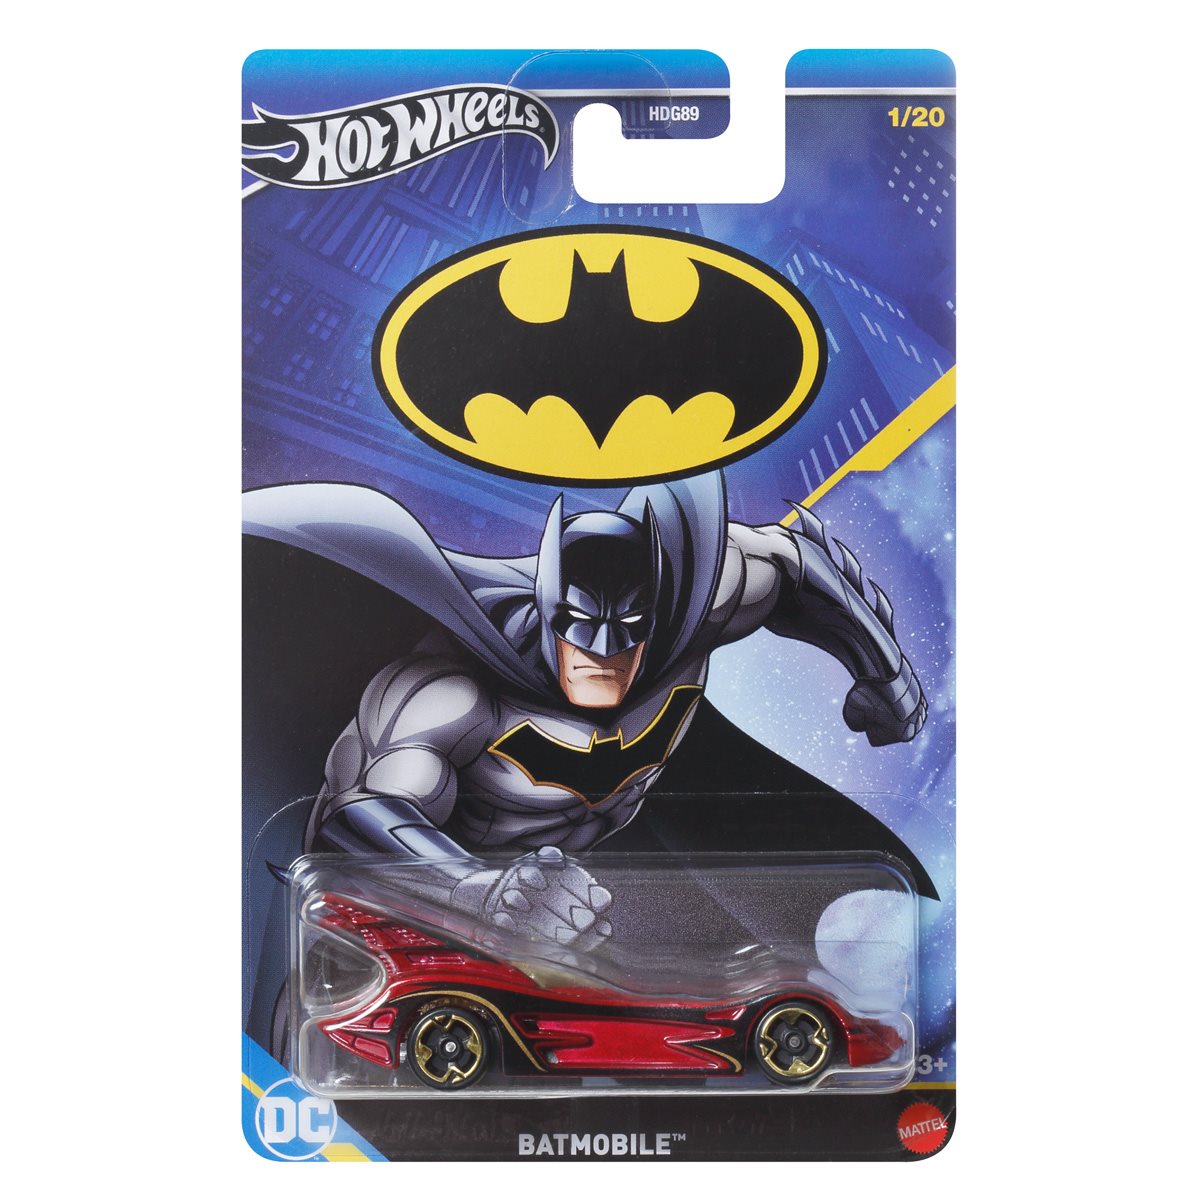  Hot Wheels Batman 5-Pack, Set of 5 Batman-Themed Toy